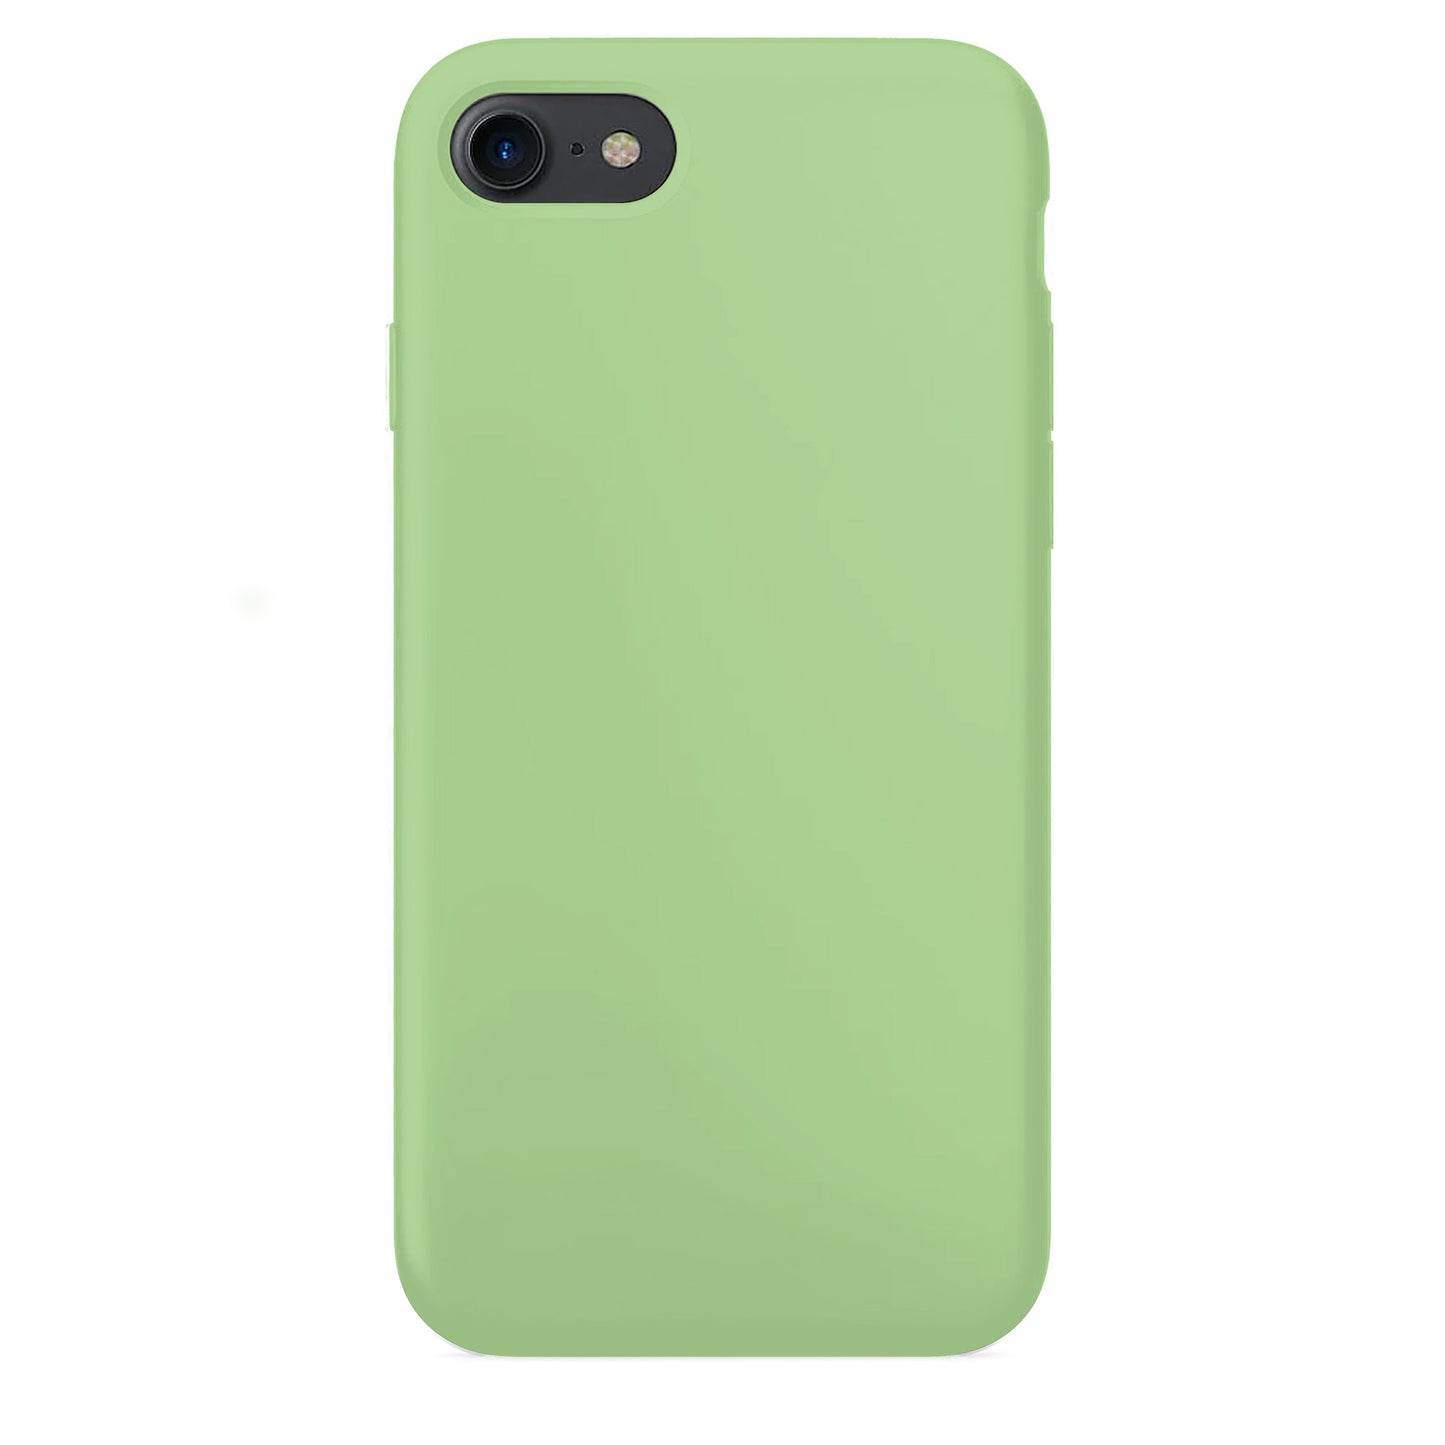 Matcha Green Silikon Hülle für iPhone